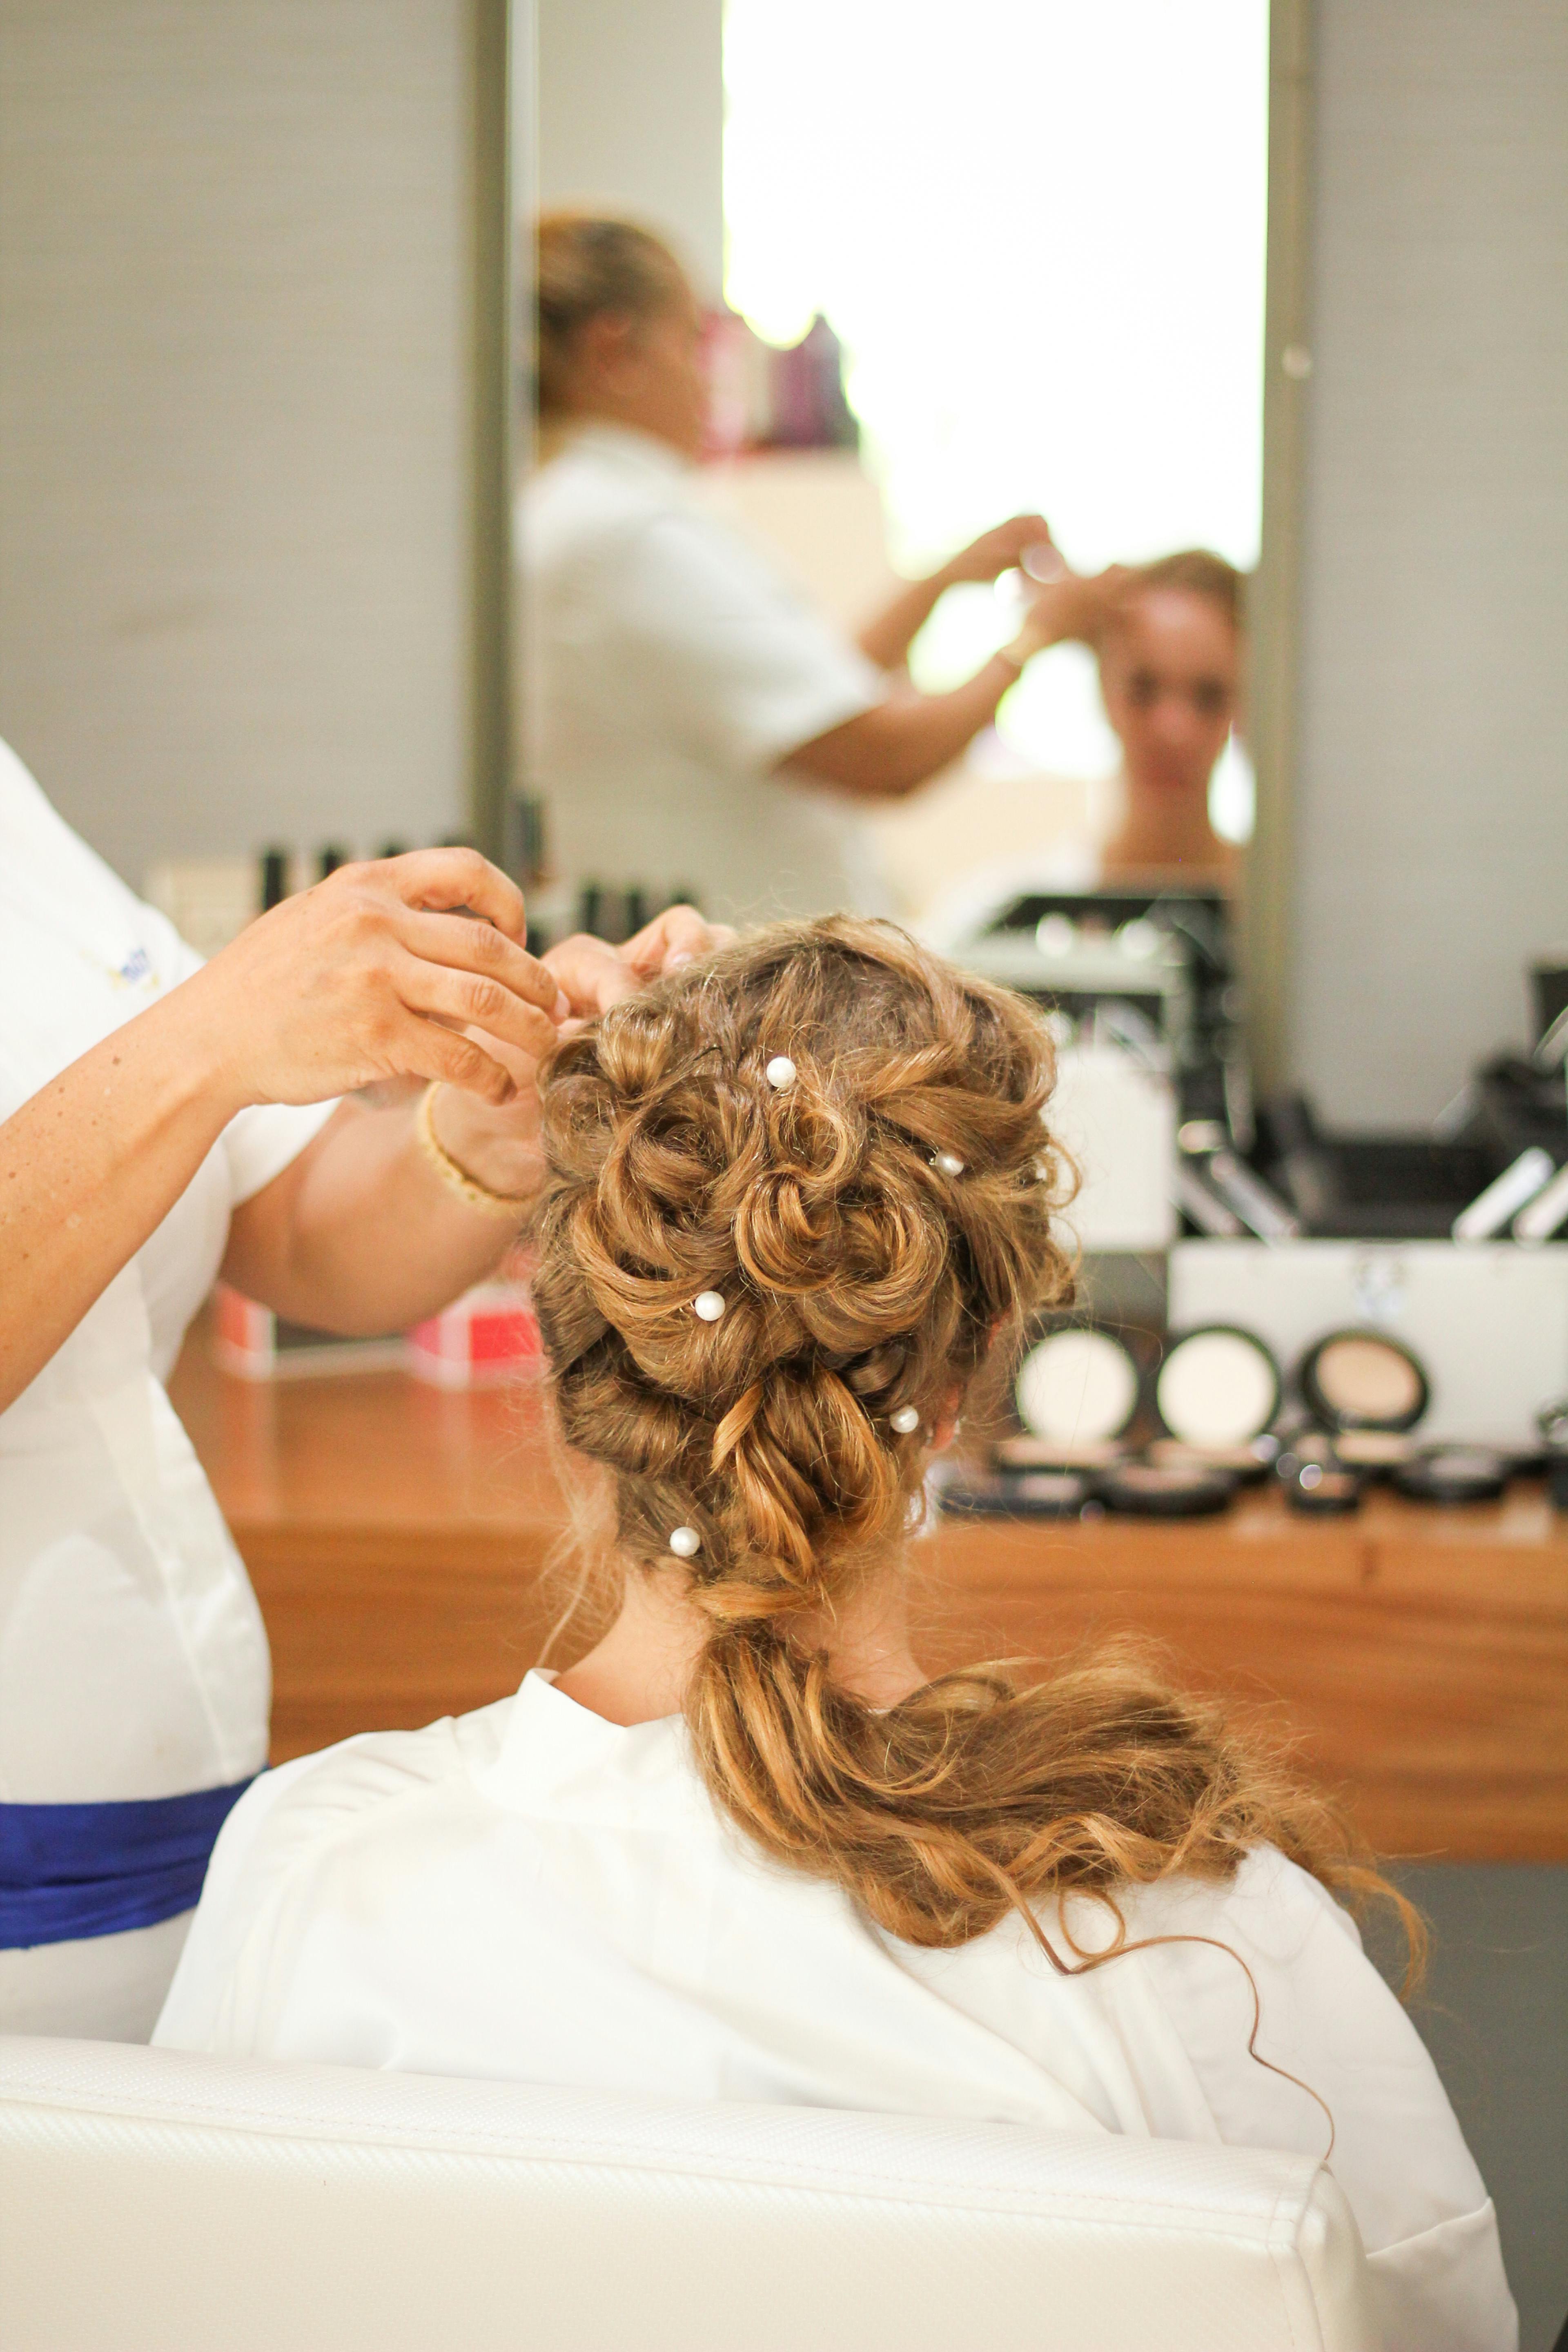 Hair Salon Photos, Download The BEST Free Hair Salon Stock Photos & HD  Images